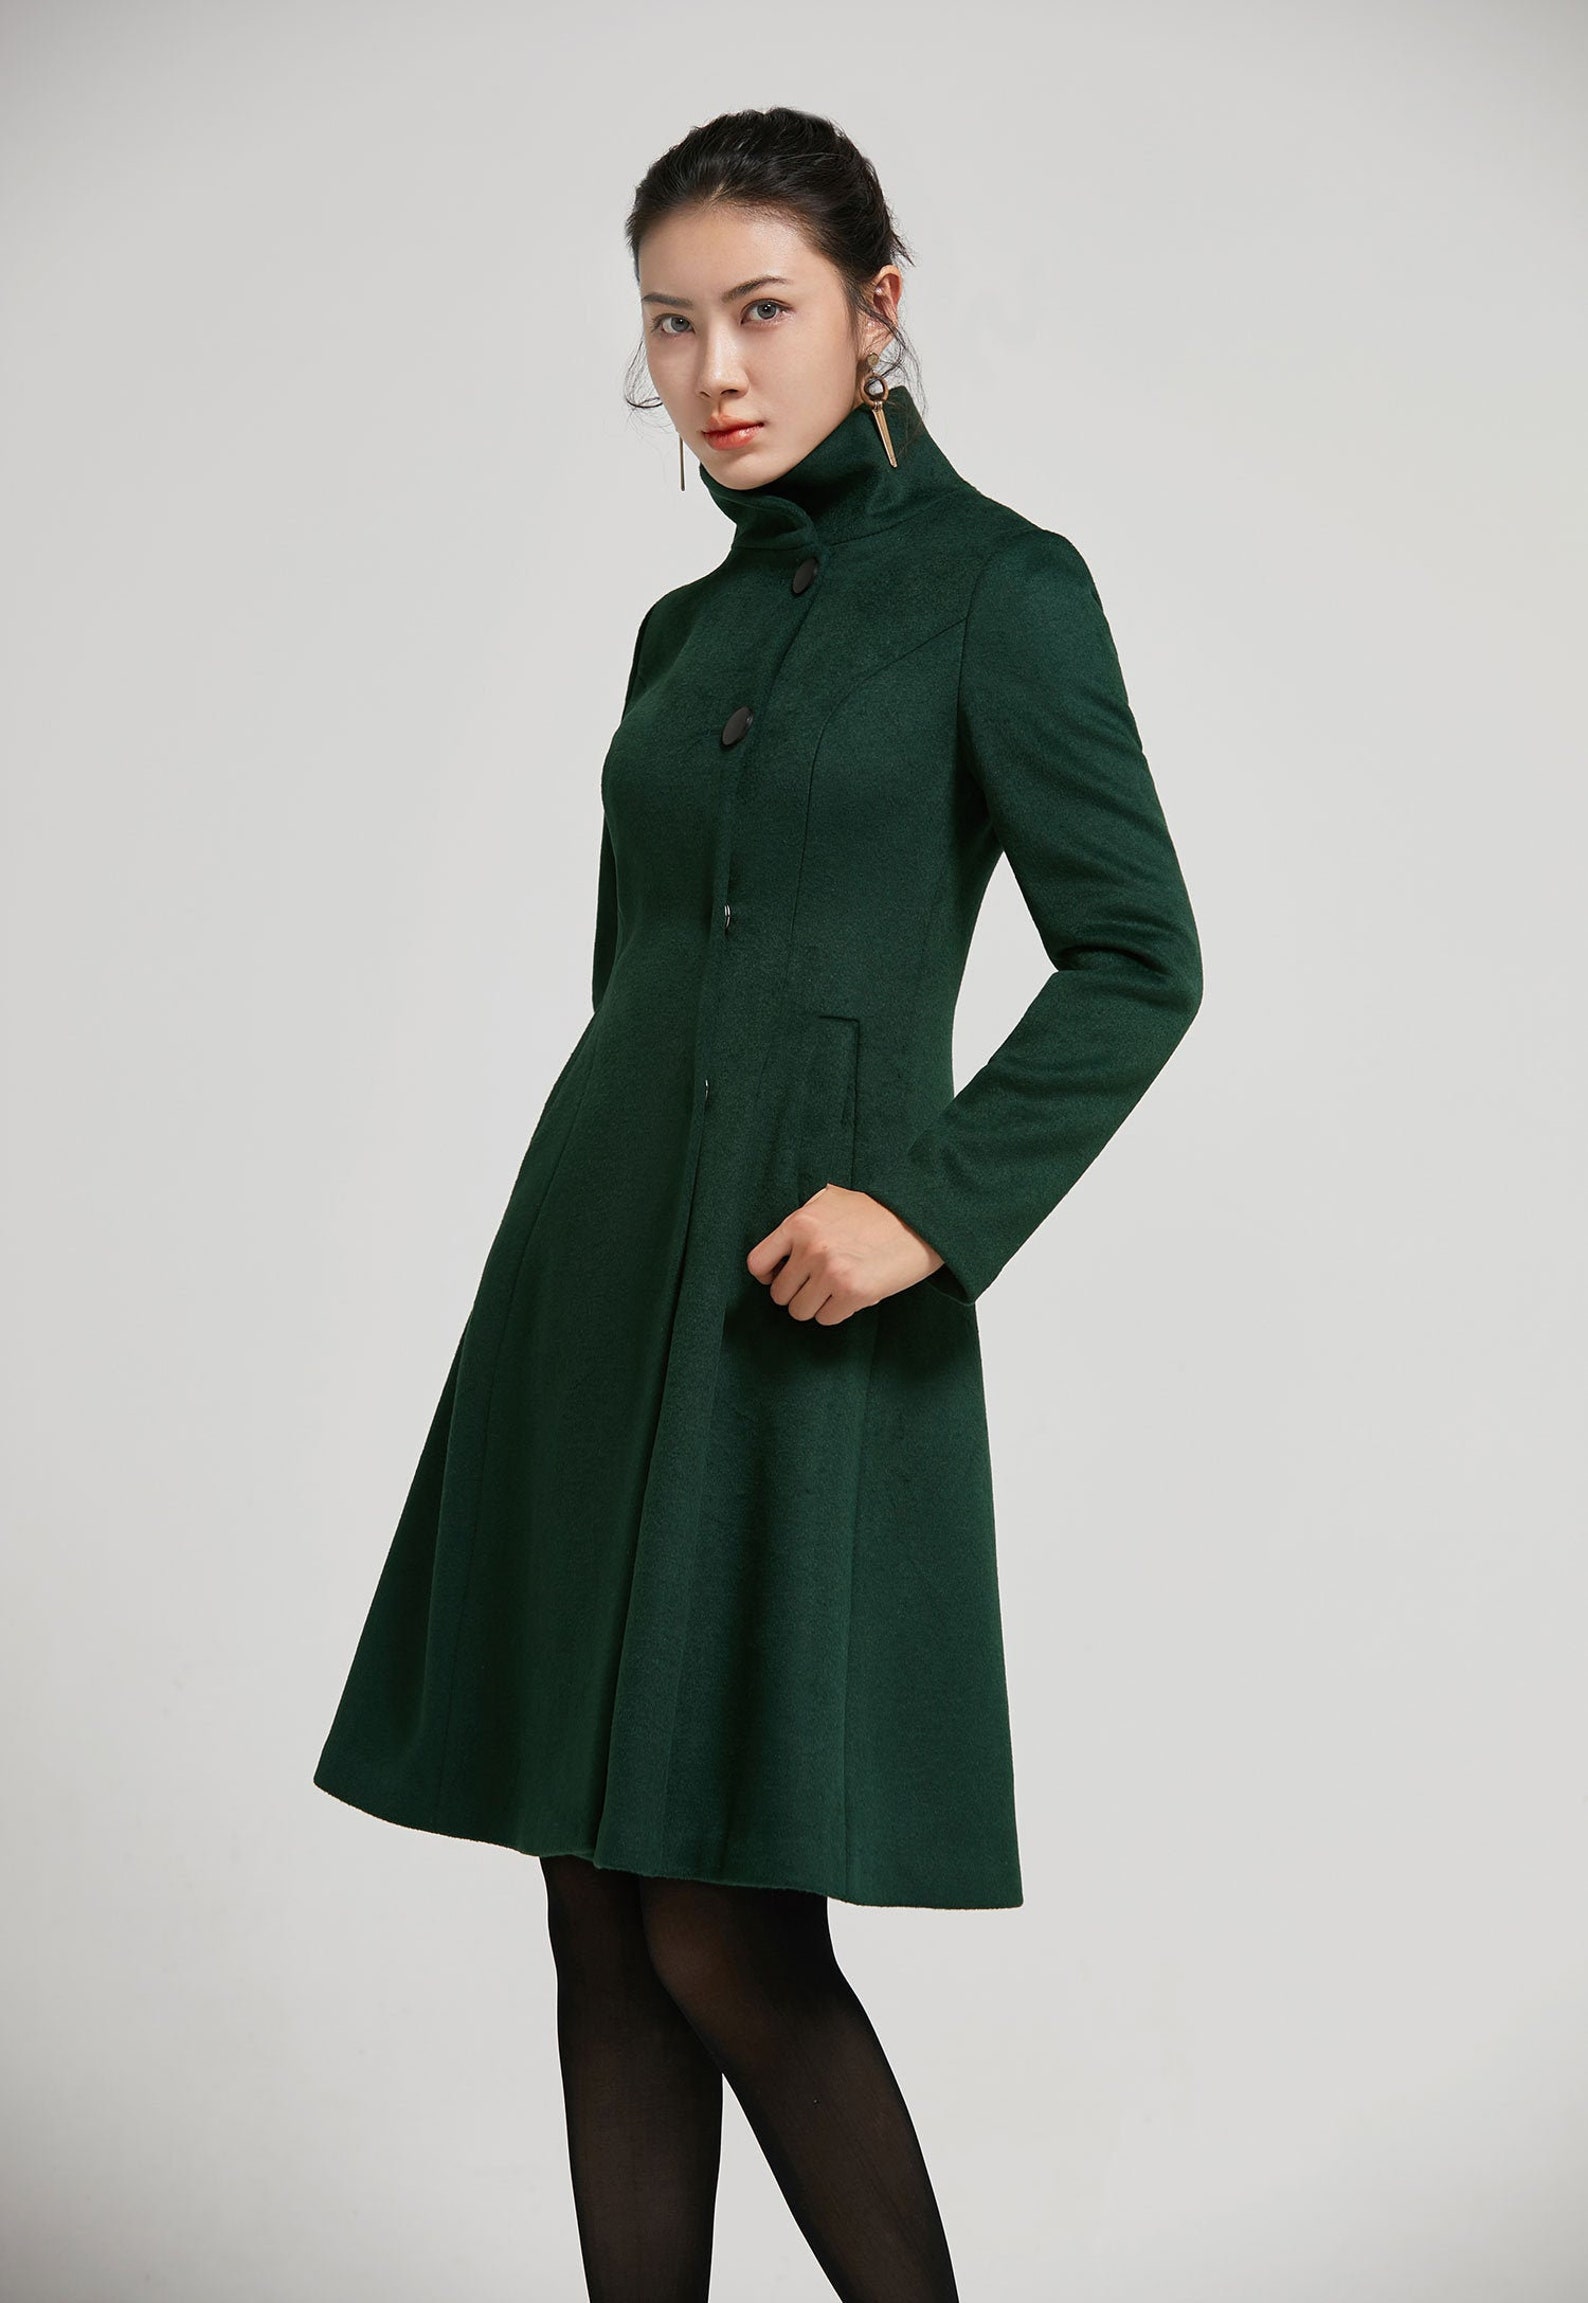 Emerald Green coat Vintage Inspired Classic Wool Coat Winter | Etsy